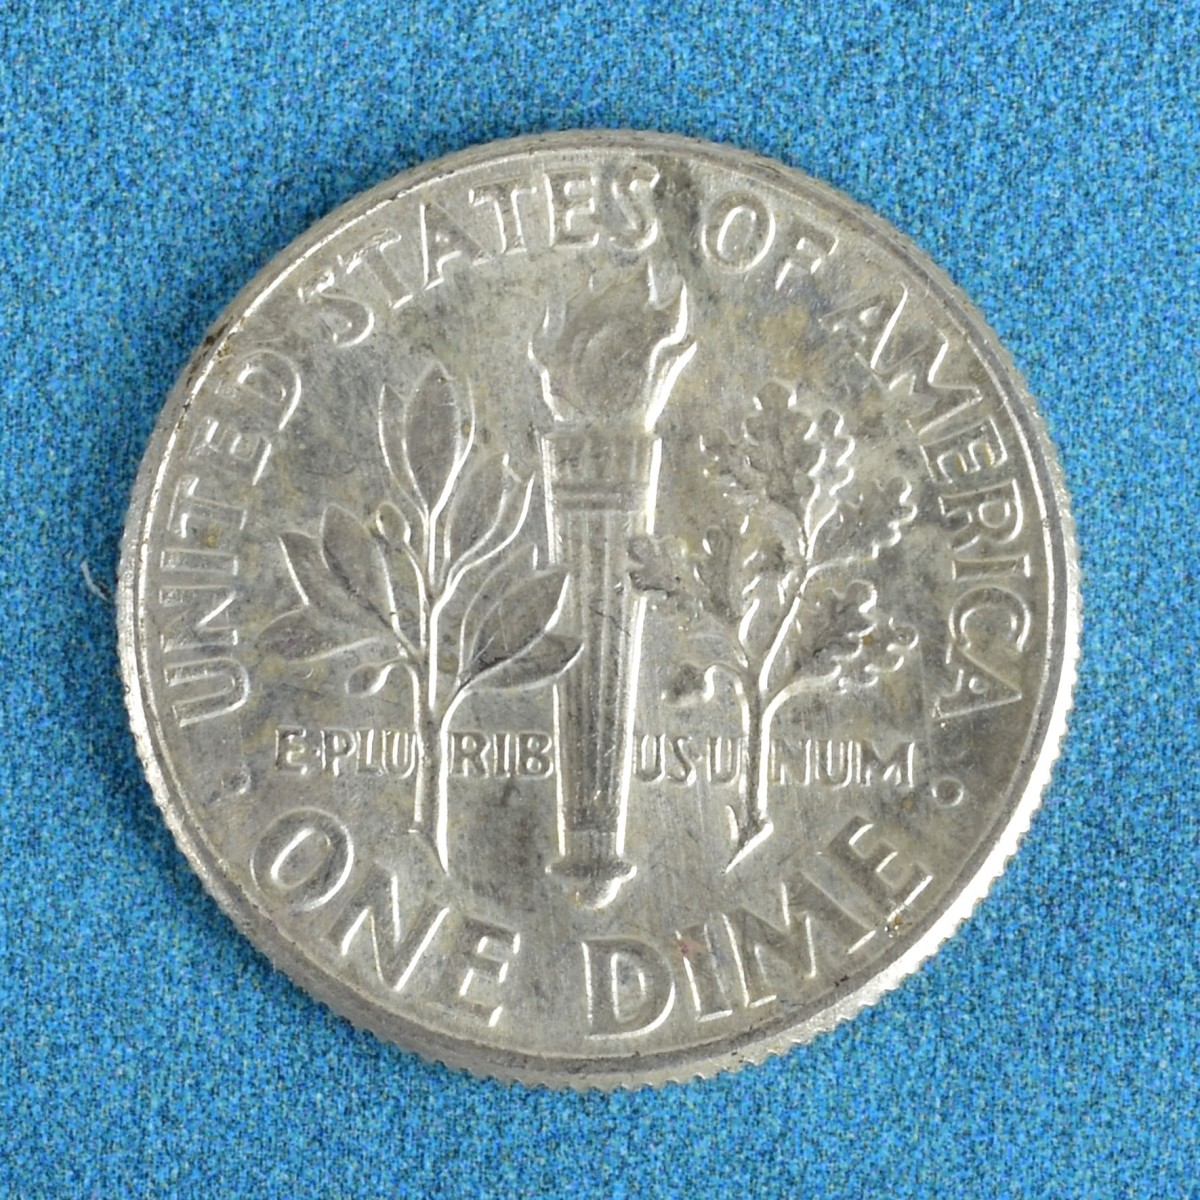 (43) U.S. Silver Dimes